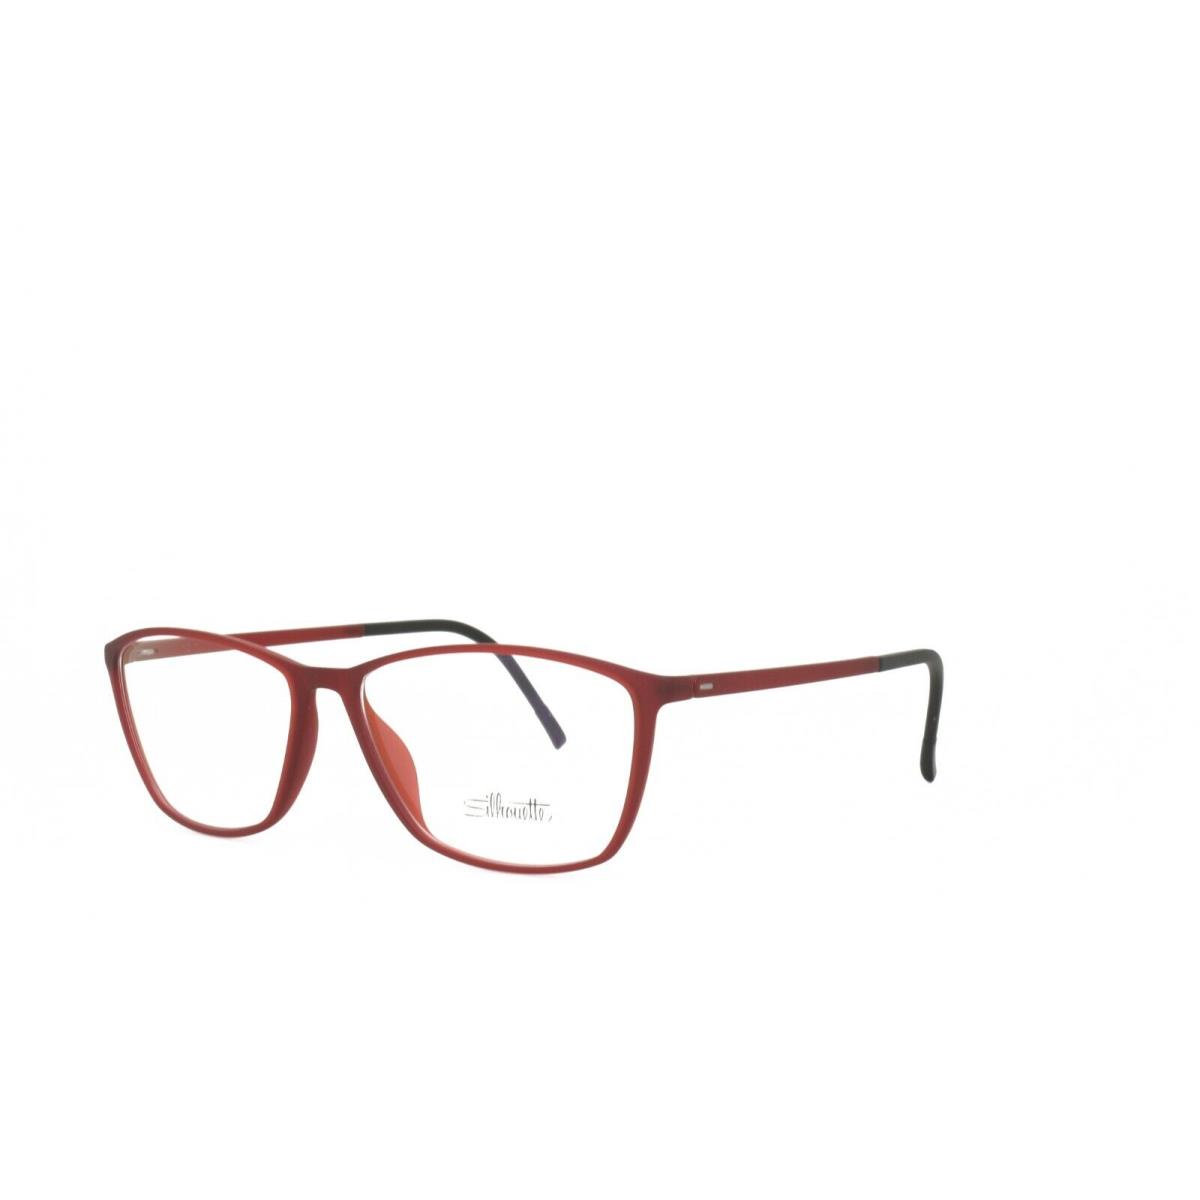 Silhouette Spx Illusion 1560 10 6108 Eyeglasses Frame 52-14-130 Red - Frame: Red